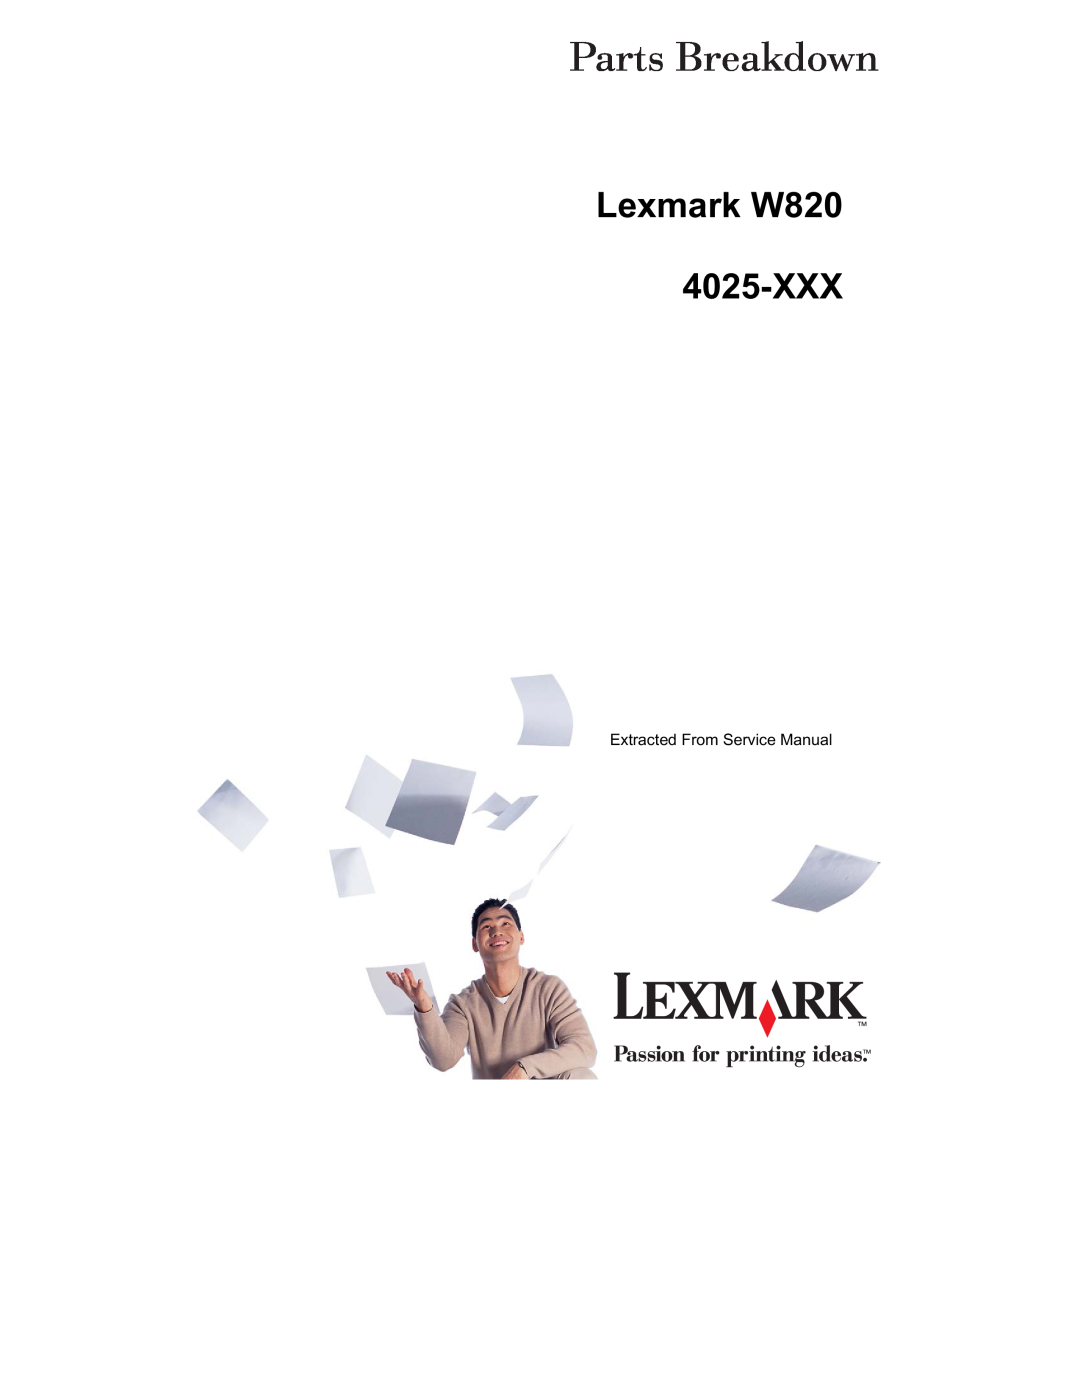 Lexmark service manual Lexmark W820 